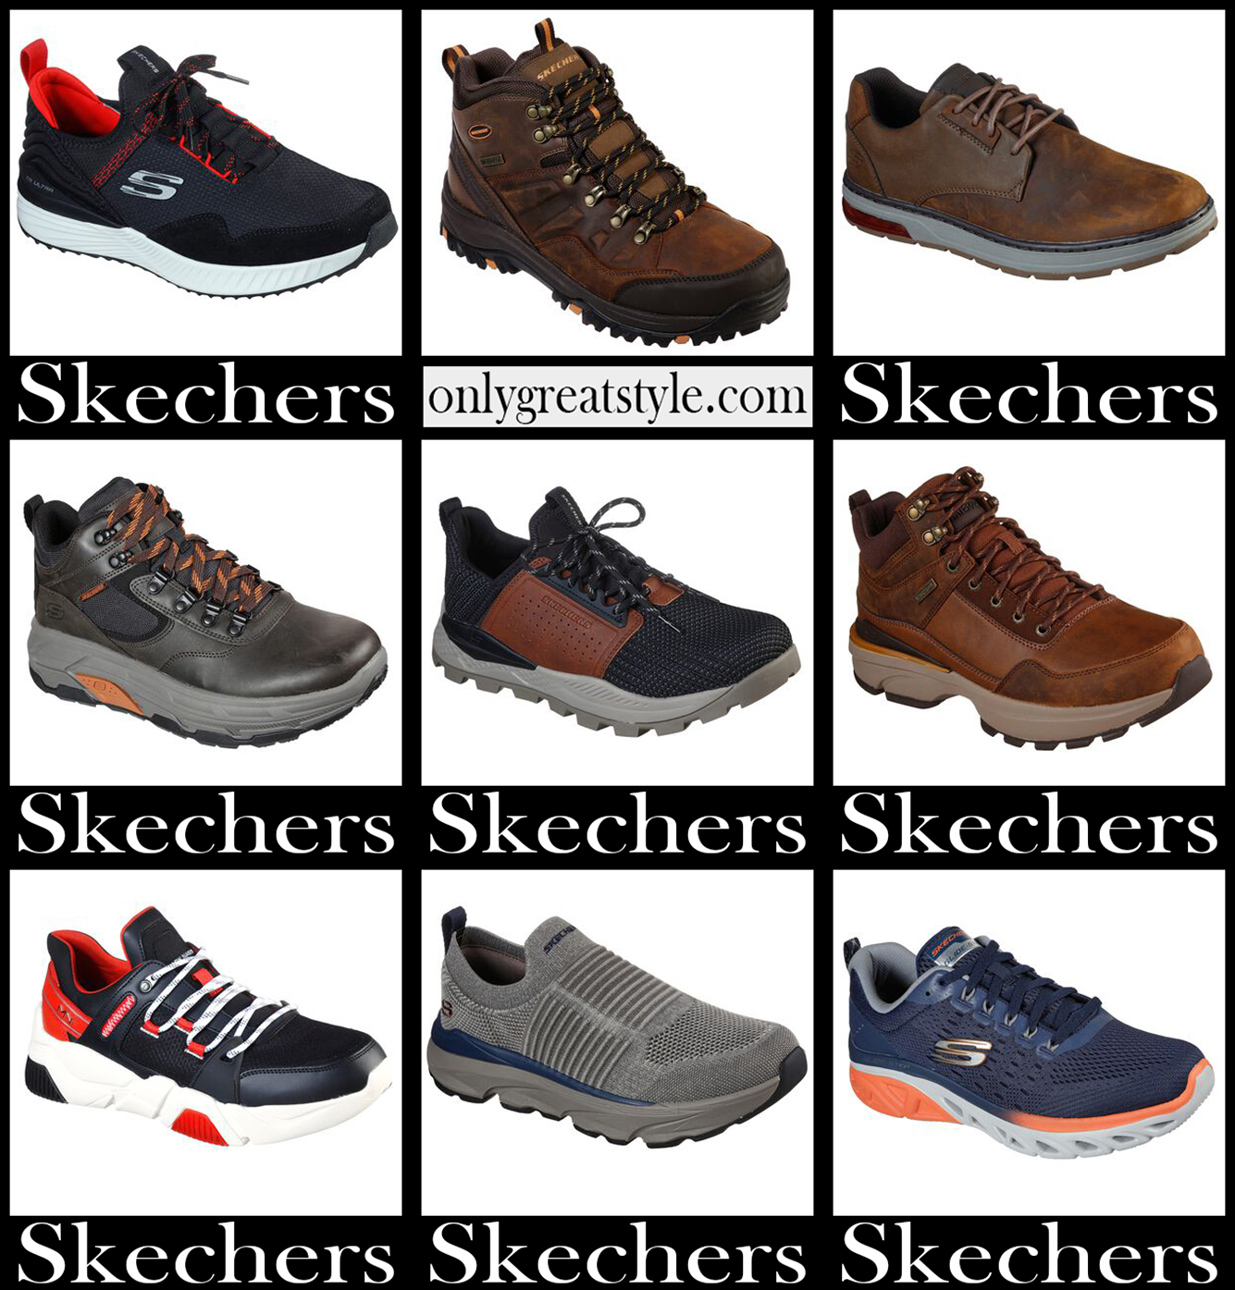 skechers latest mens shoes